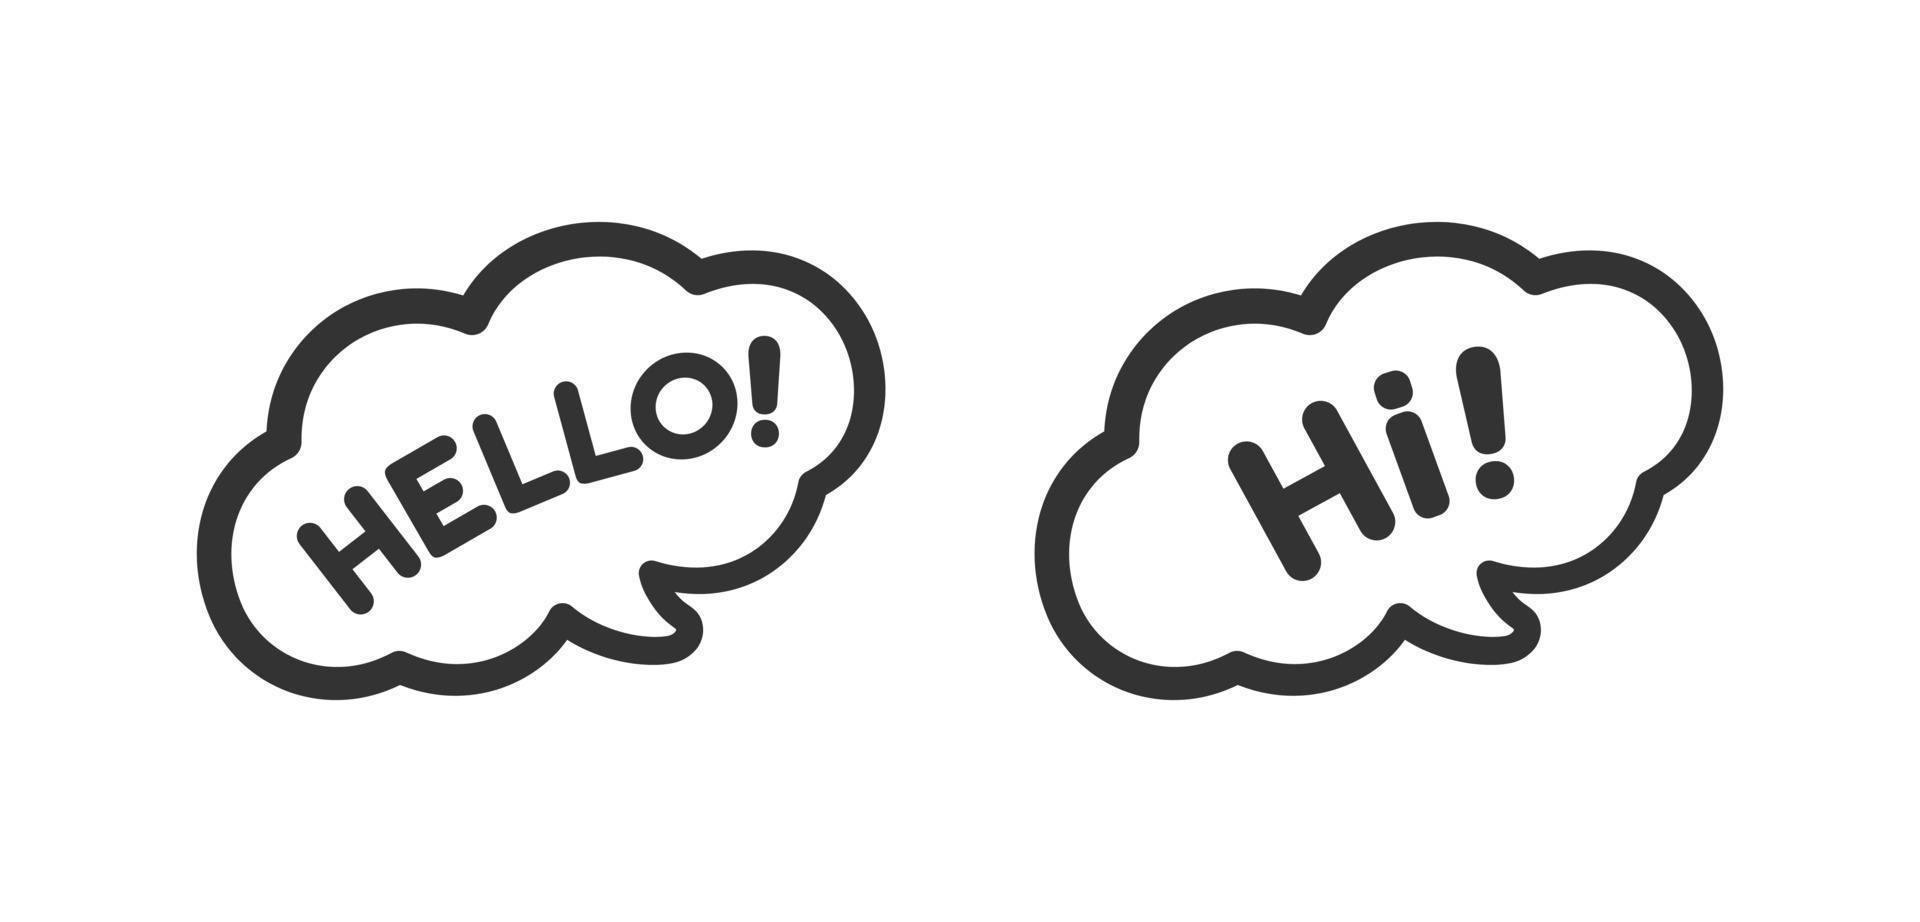 Cute Hello greeting speech bubble icon set. Simple flat vector illustration.